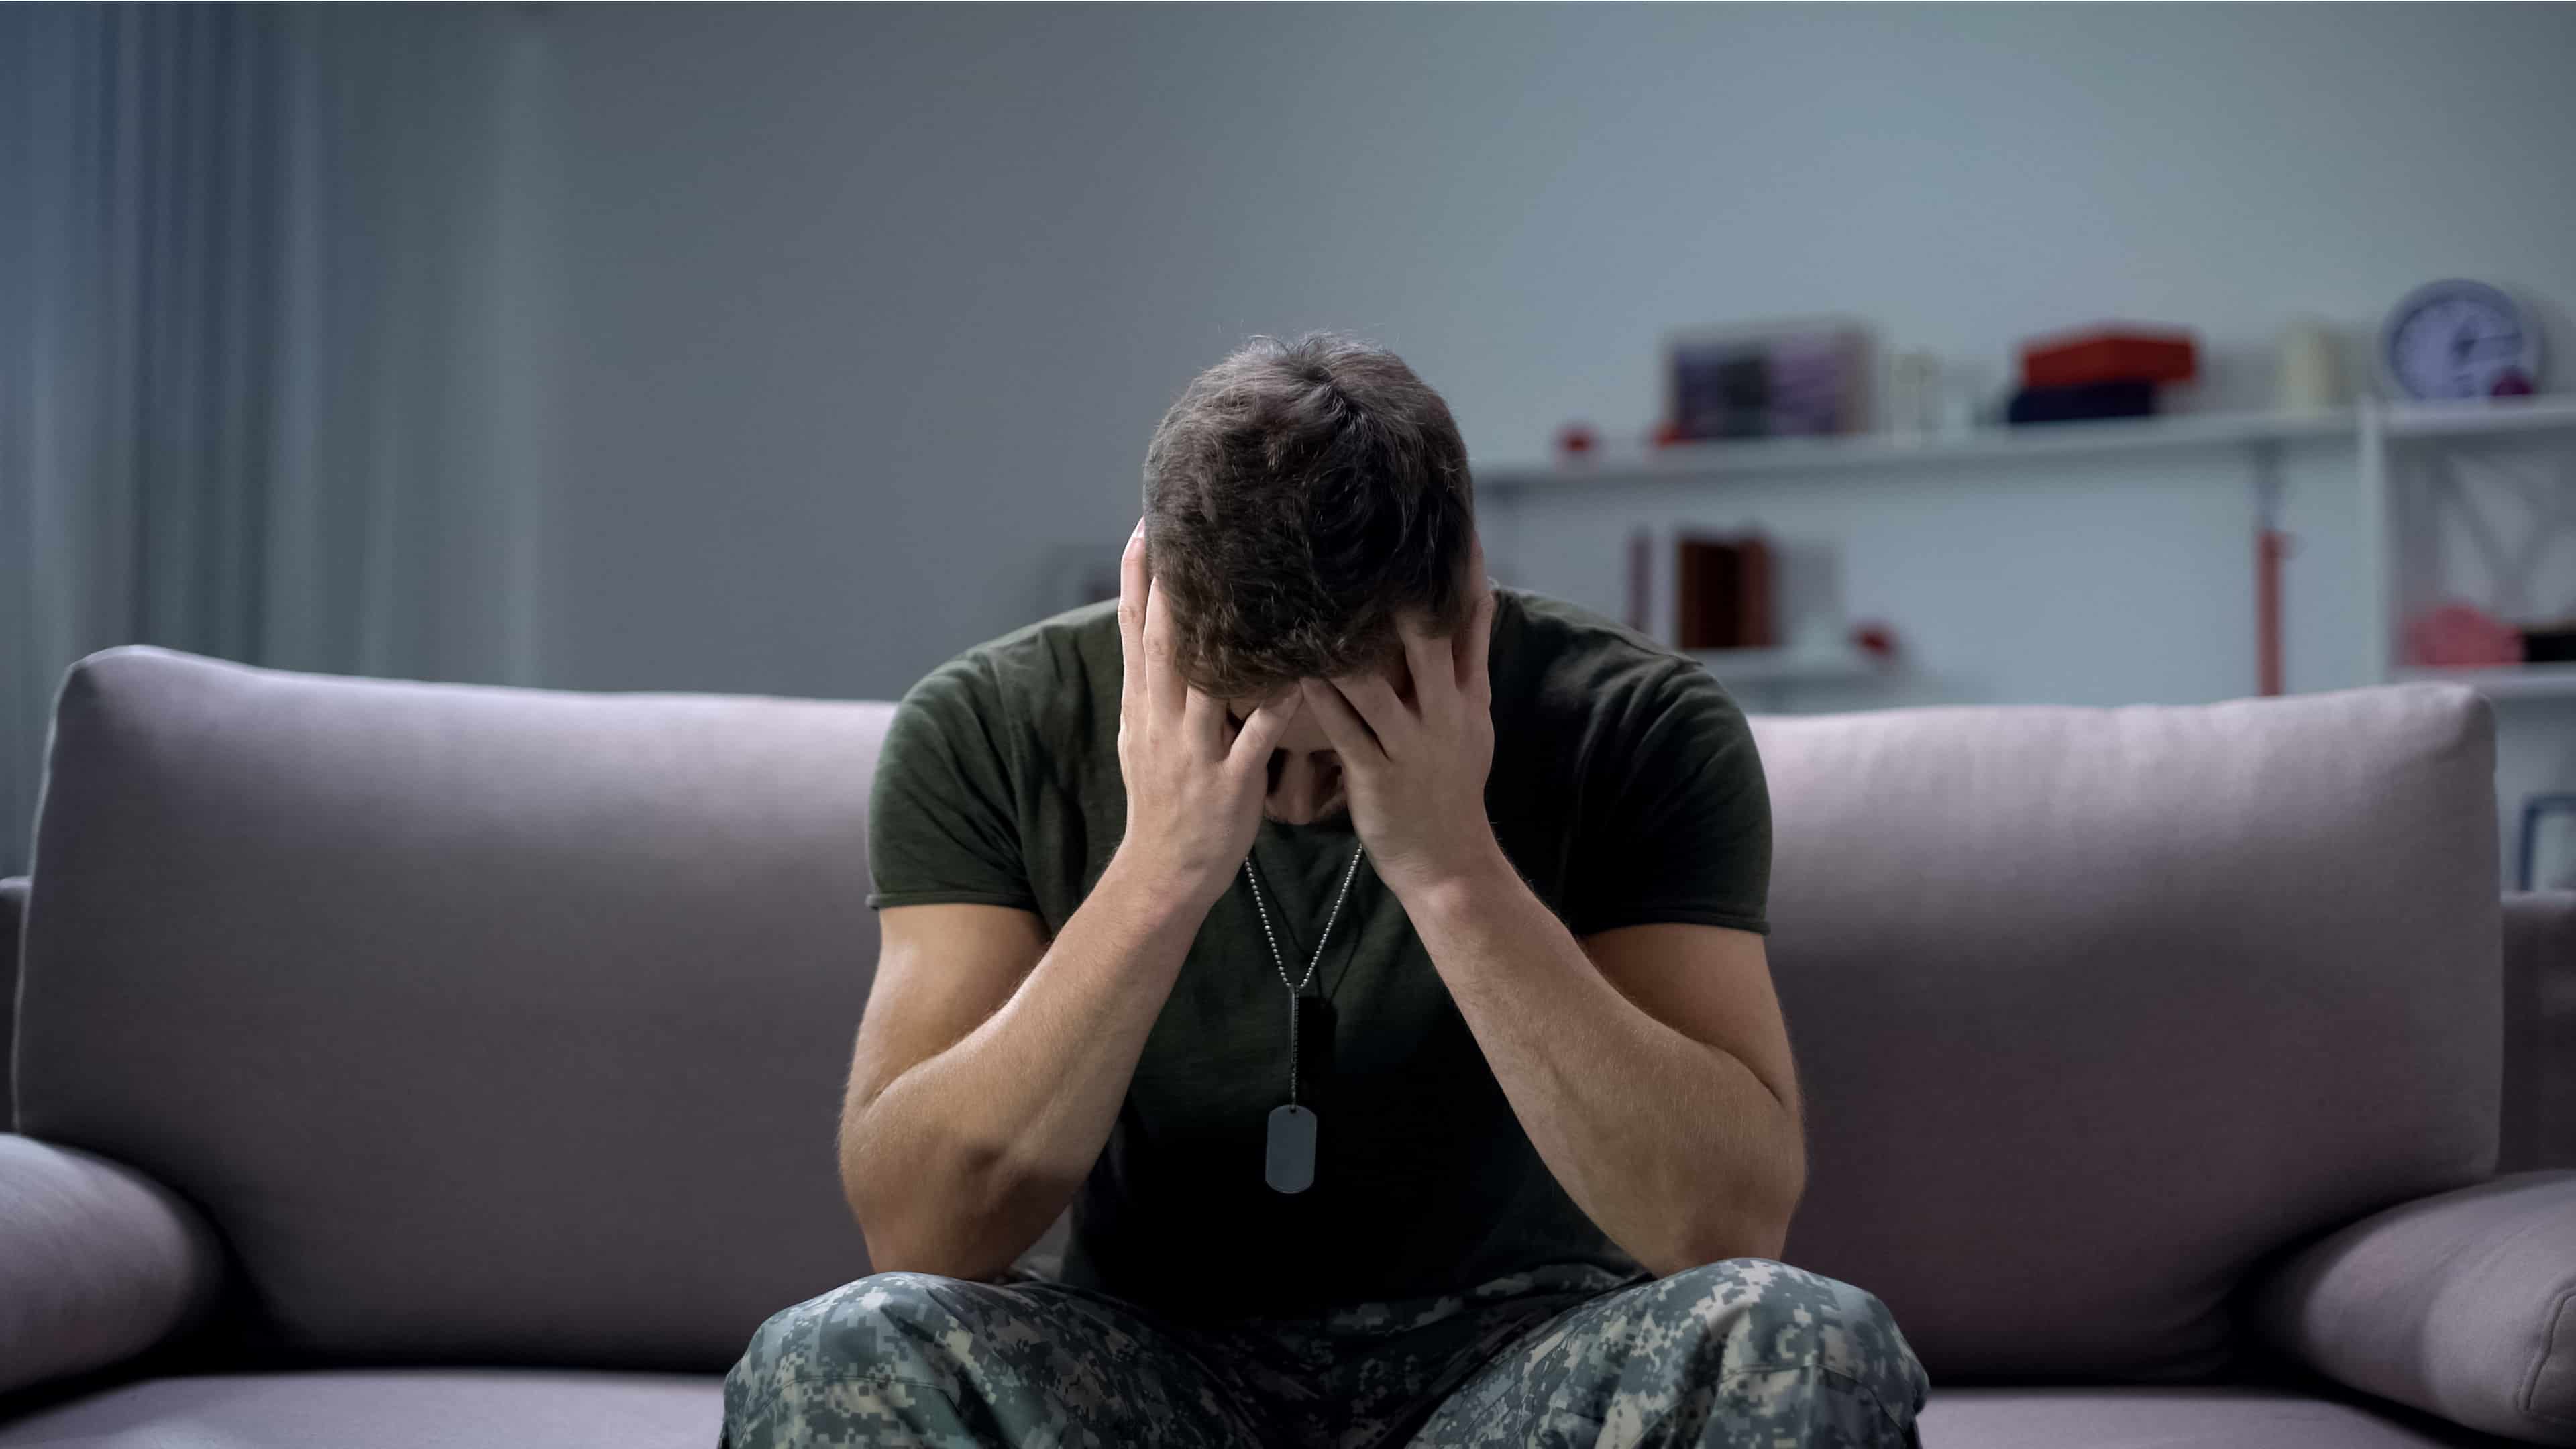 VA Disability Rating for PTSD in 2020